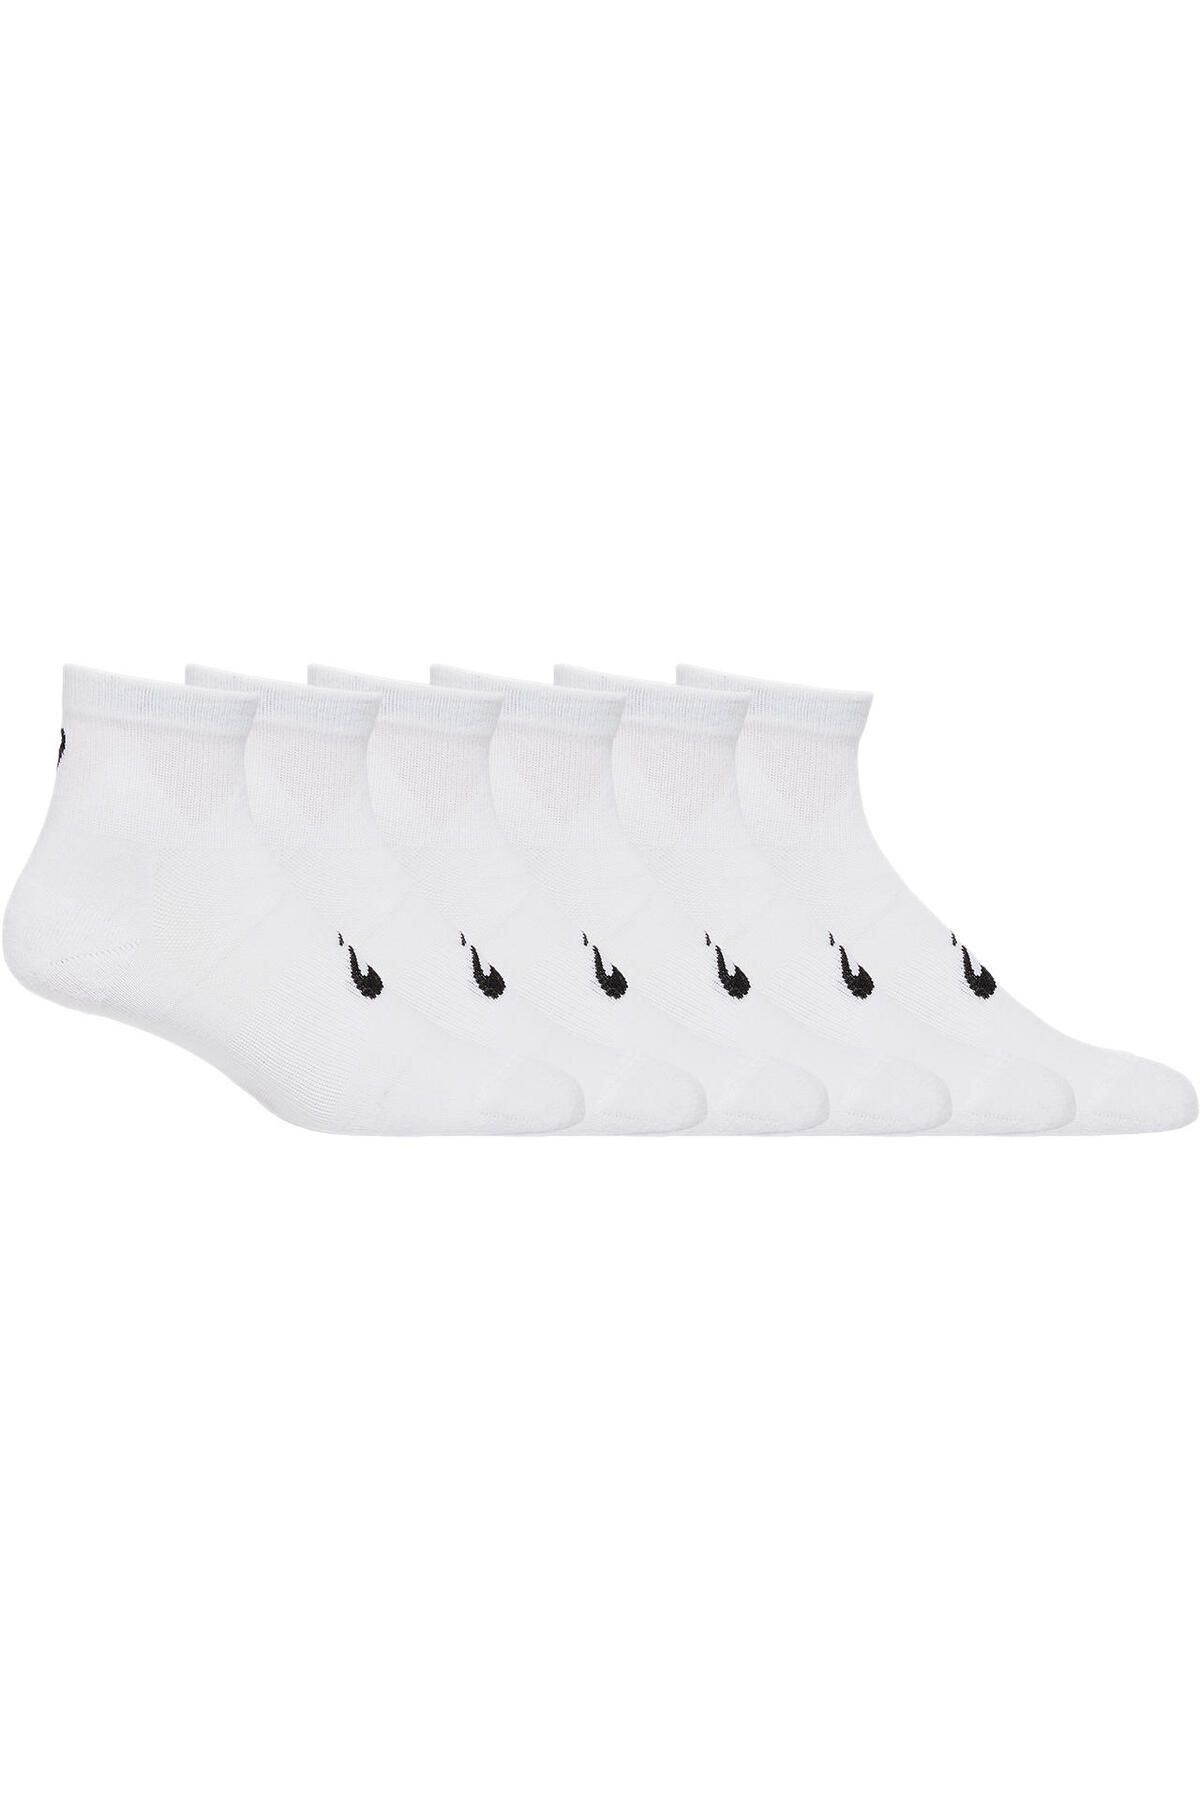 Asics 6ppk Quarter Sock Unisex Beyaz Çorap 3033b720-100 3033B720-100